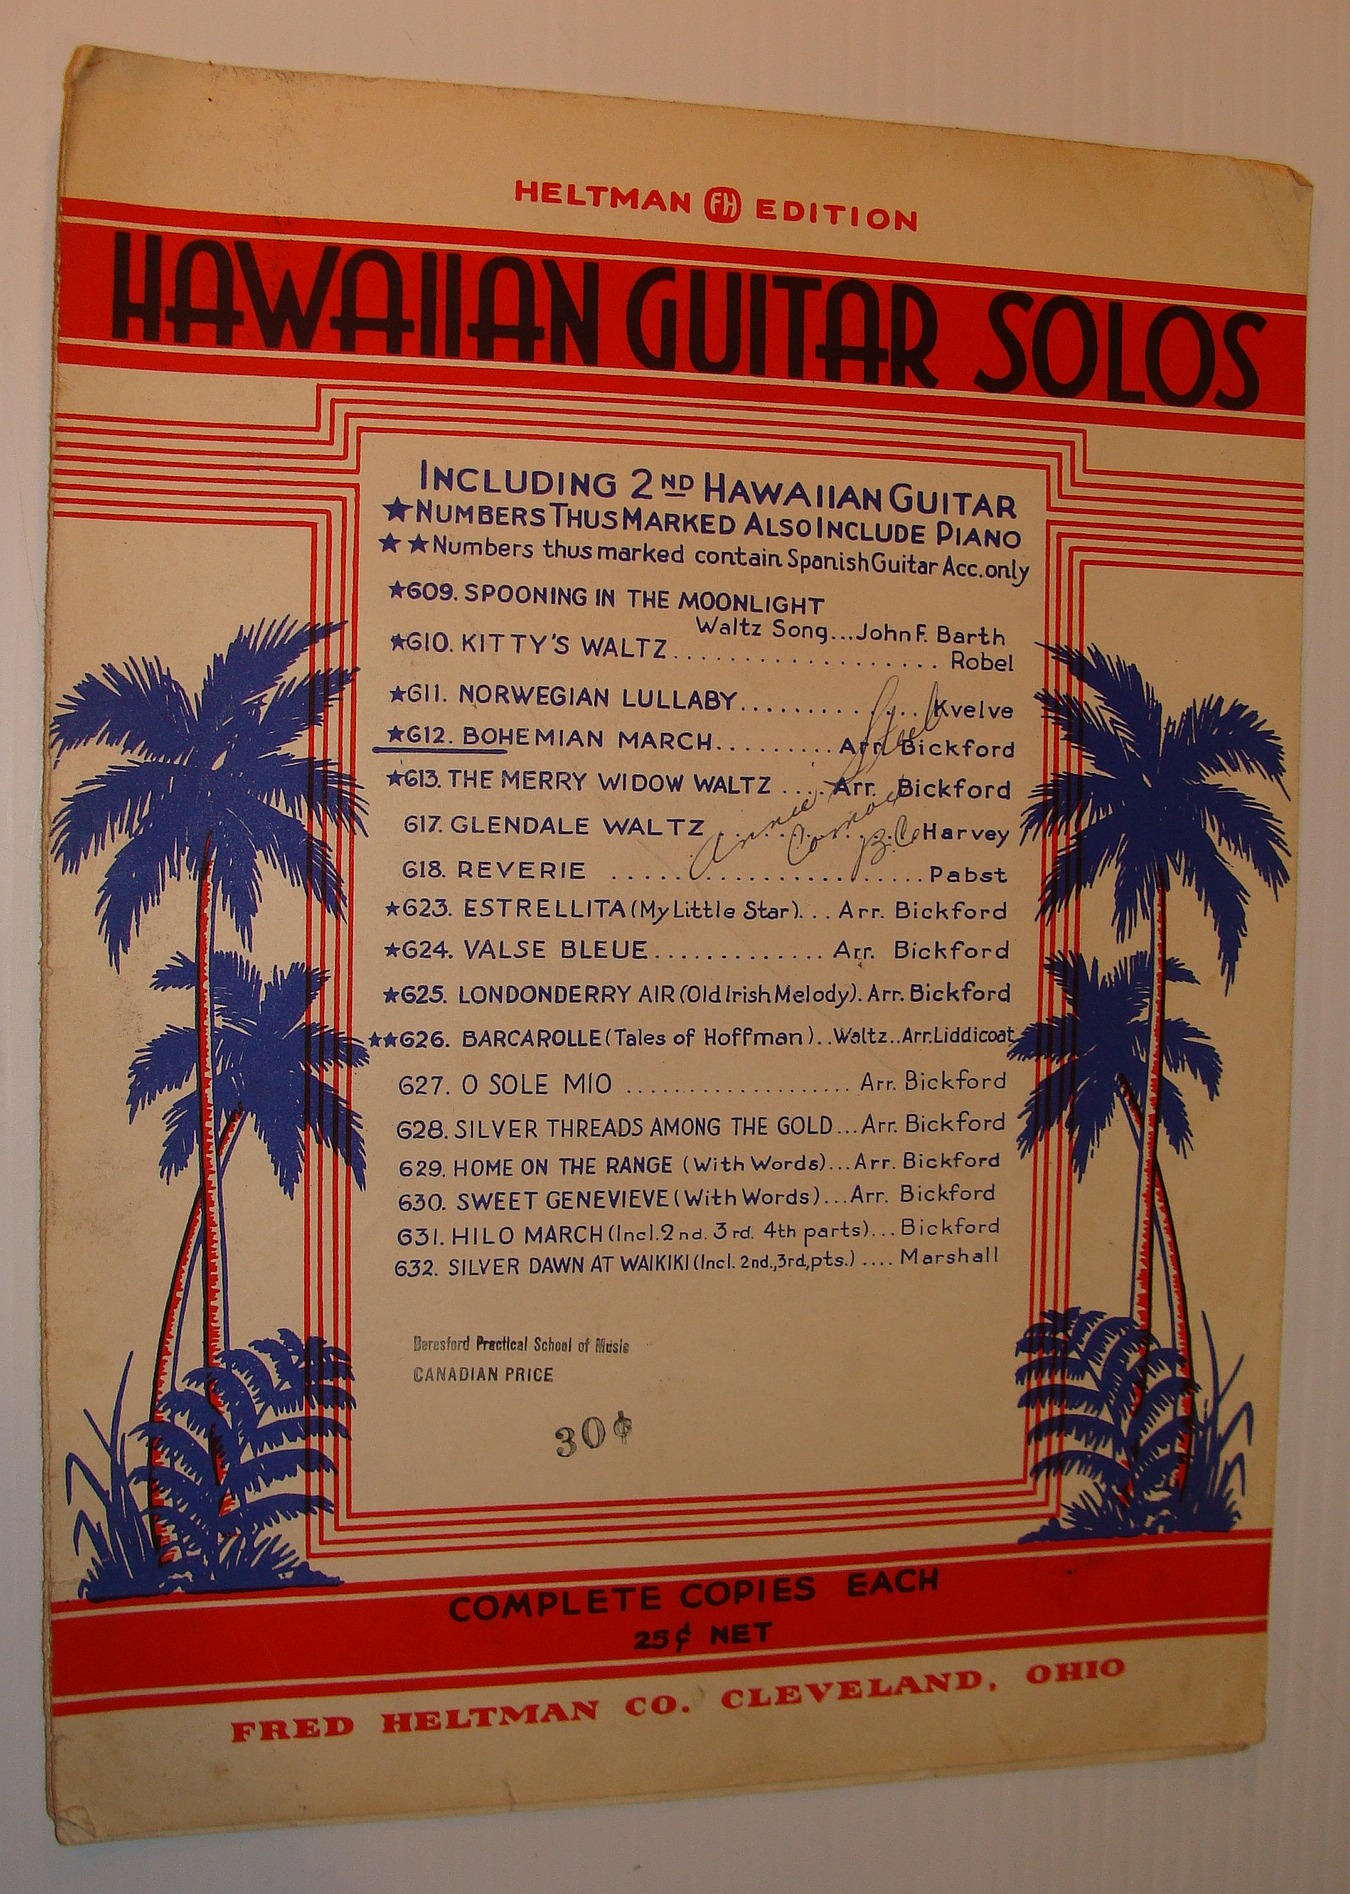 BICKFORD, ZARH M. (ARRANGEMENT) - Bohemian March - Sheet Music for 1st Hawaiian Guitar, Piano and Second Hawaiian Guitar